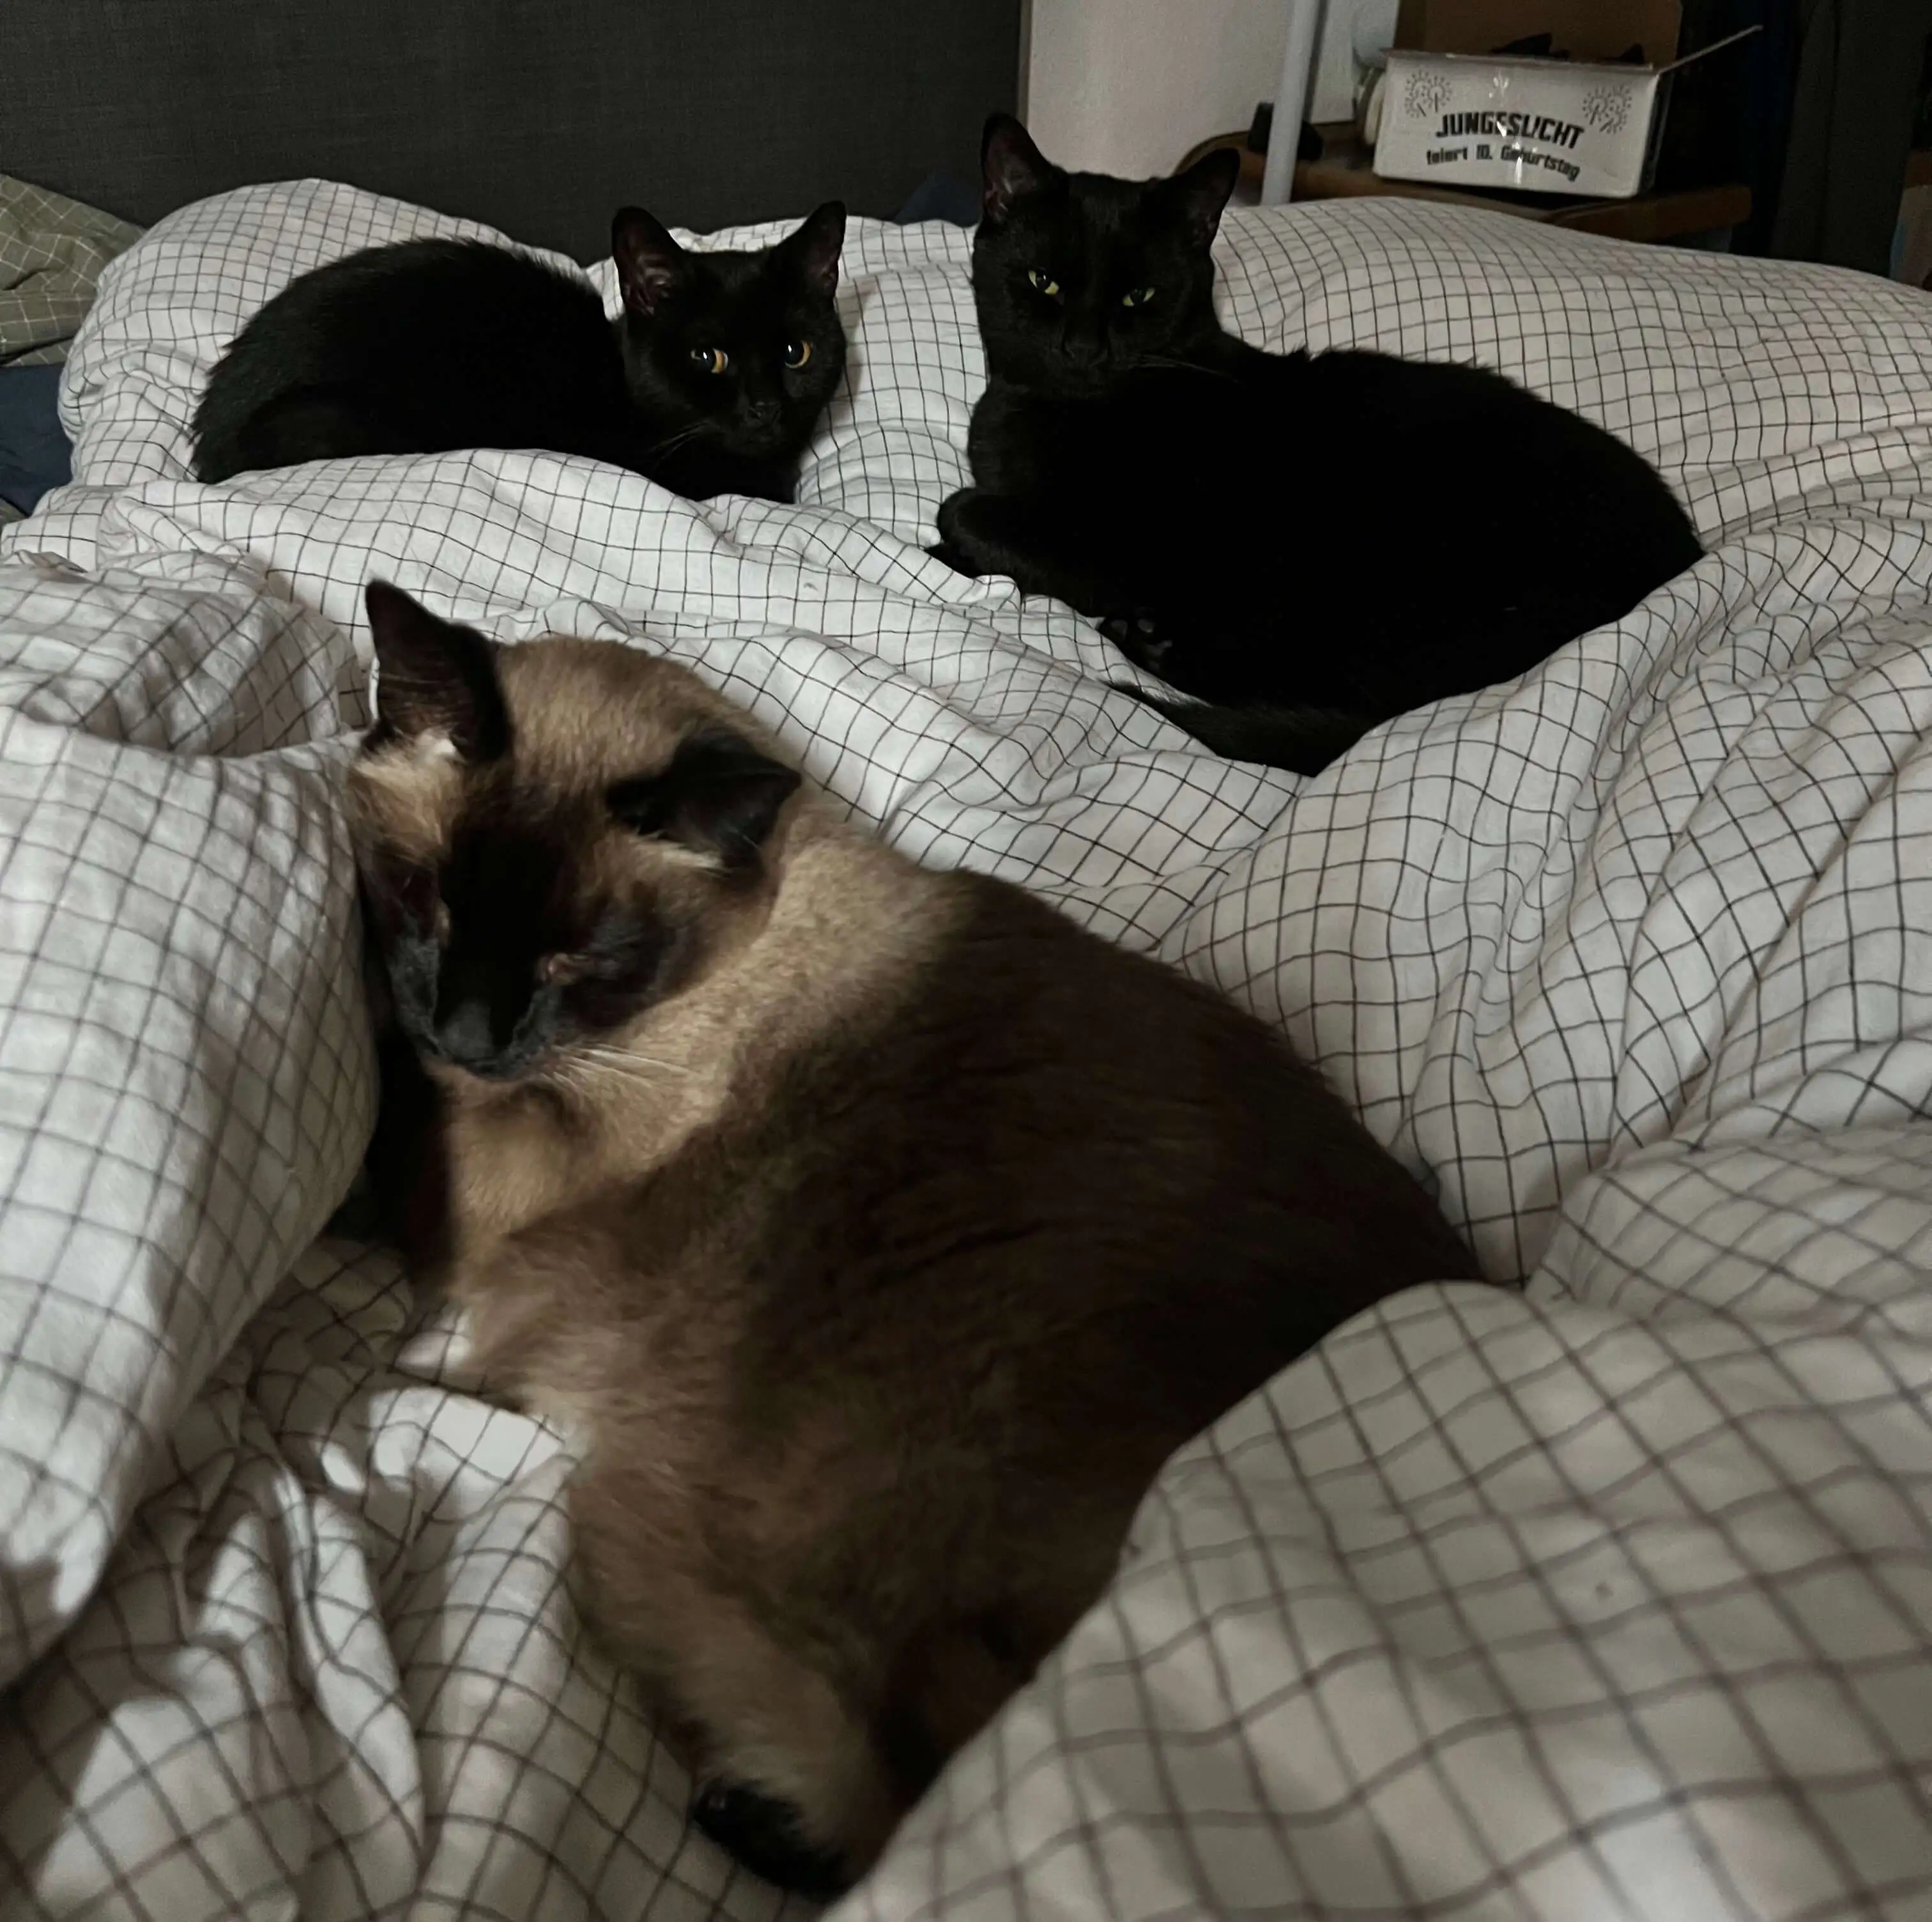 Kagi (Siamese), Orpheus (Big Black Cat) and Onyx (Smol Black Cat)